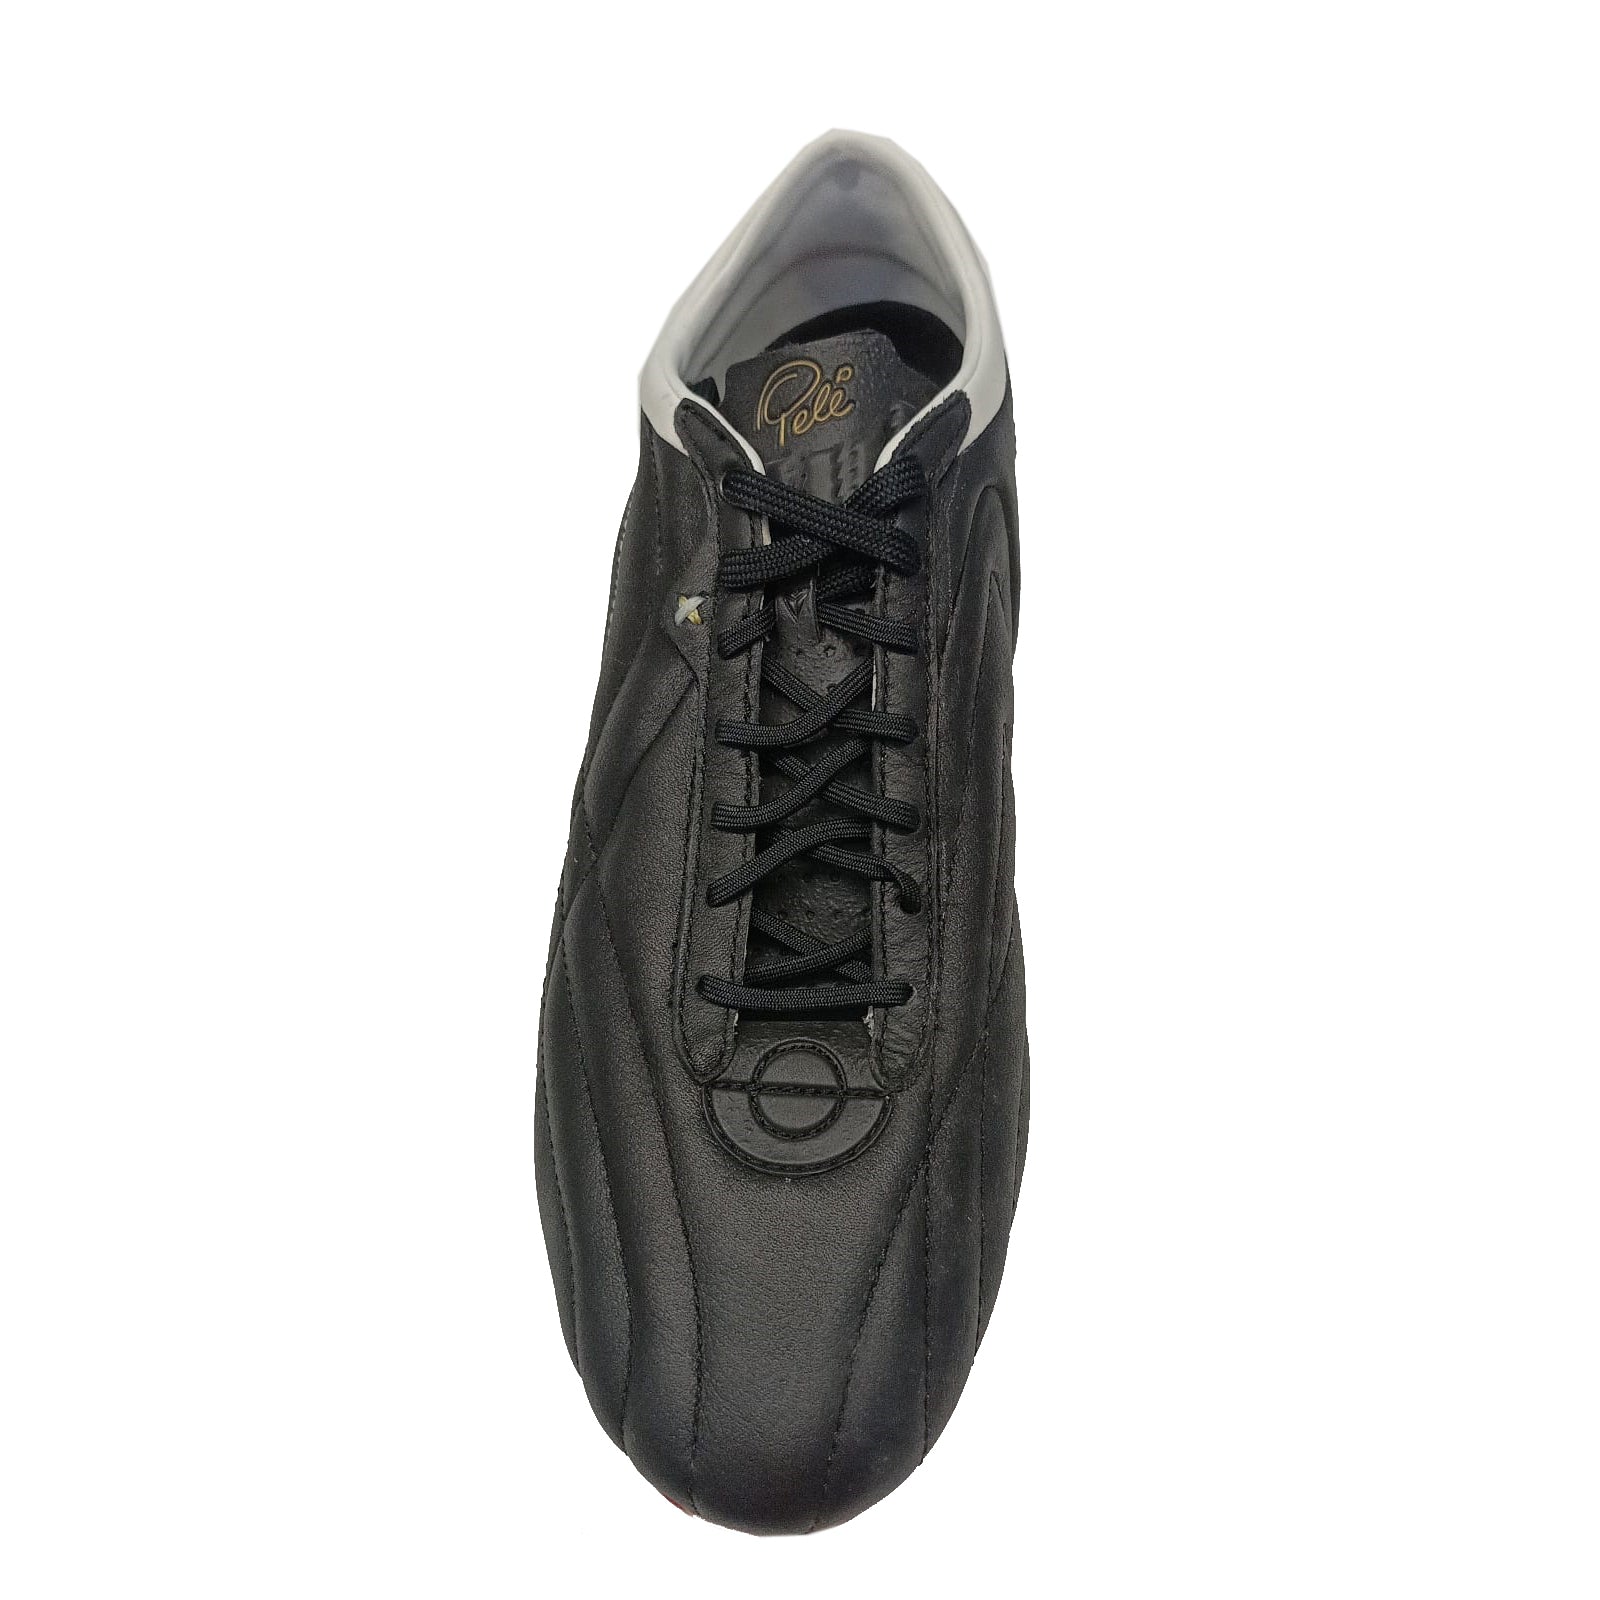 Pele Sports 1962 Redeemer 6SG Men's Football Boots - Black/High Risk Red/Rich Gold